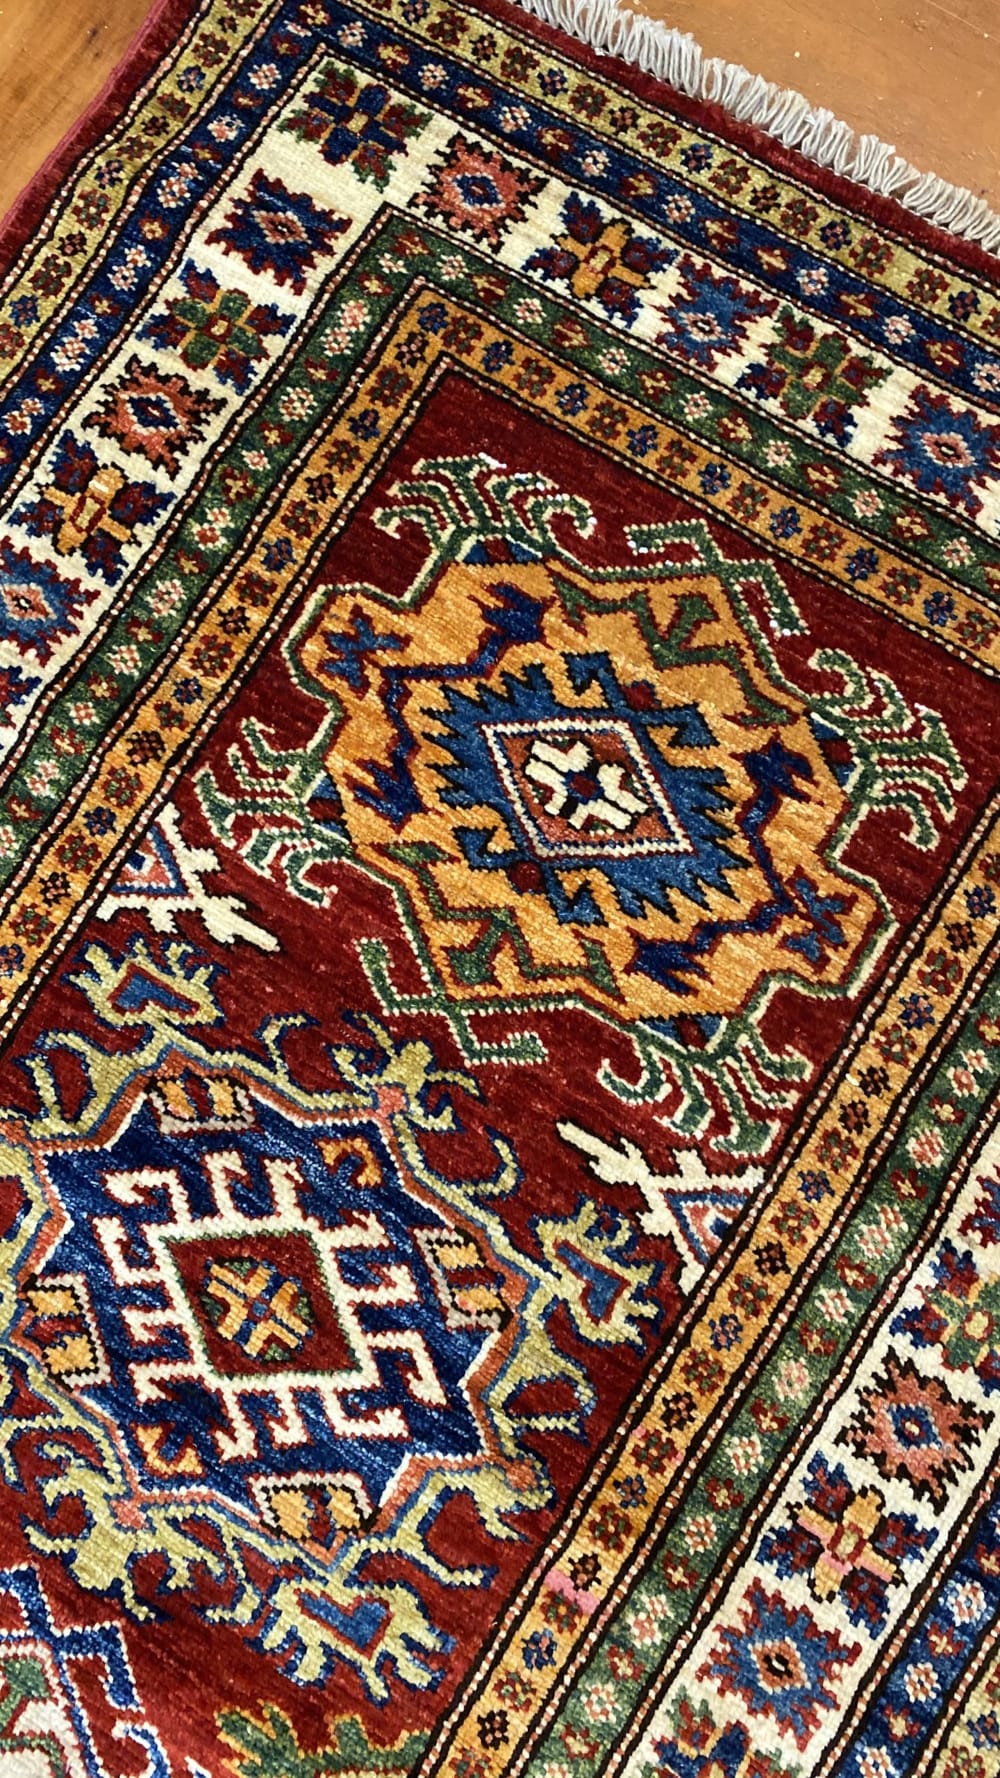 Rug# 24338, Afghan Turkaman weave 19th c Tabriz design, hand spun wool vegetable dyes, 243x80 cm RRP $1800, Special $750 (3)